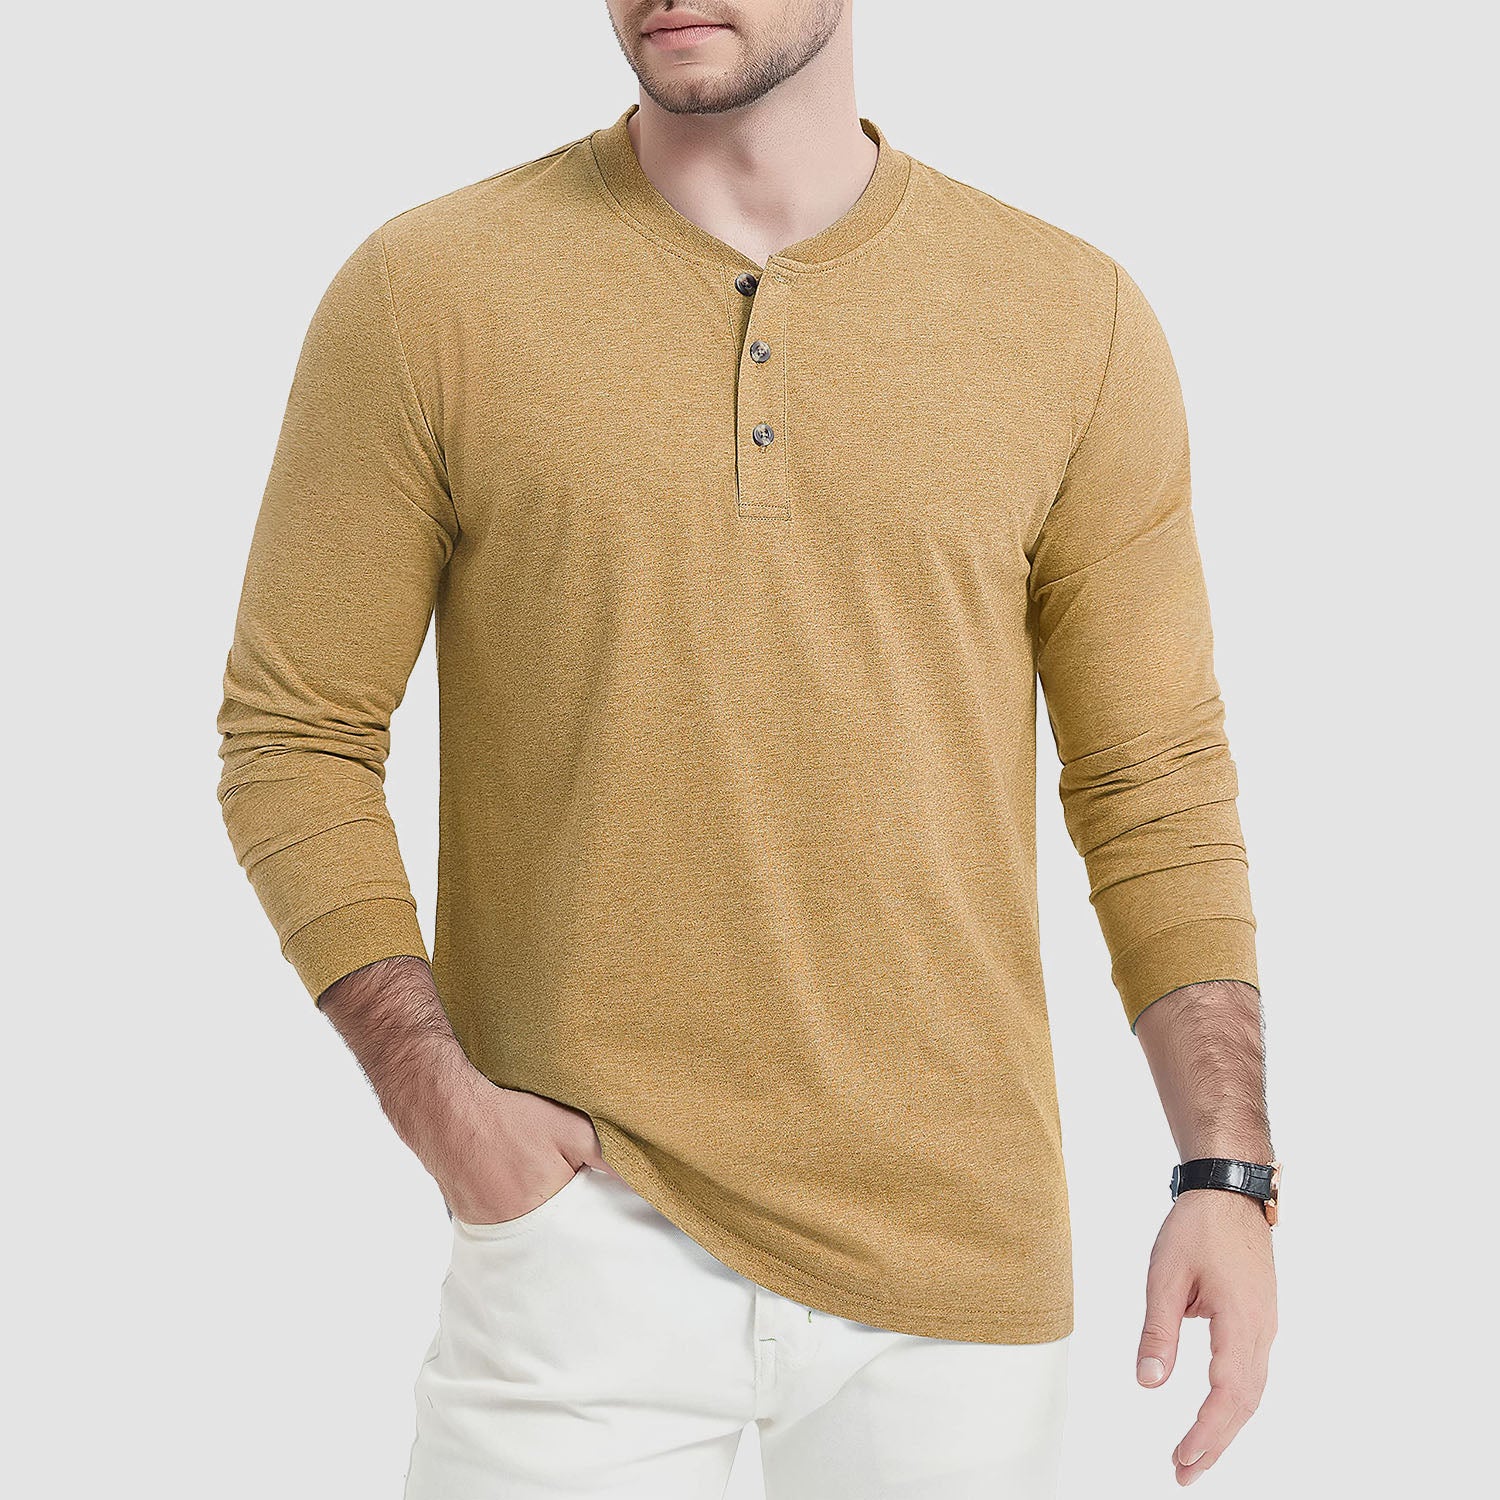 Mens Henley Shirts Long Sleeve Cotton Casual T-Shirt Fashion Front Placket Work T-Shirts